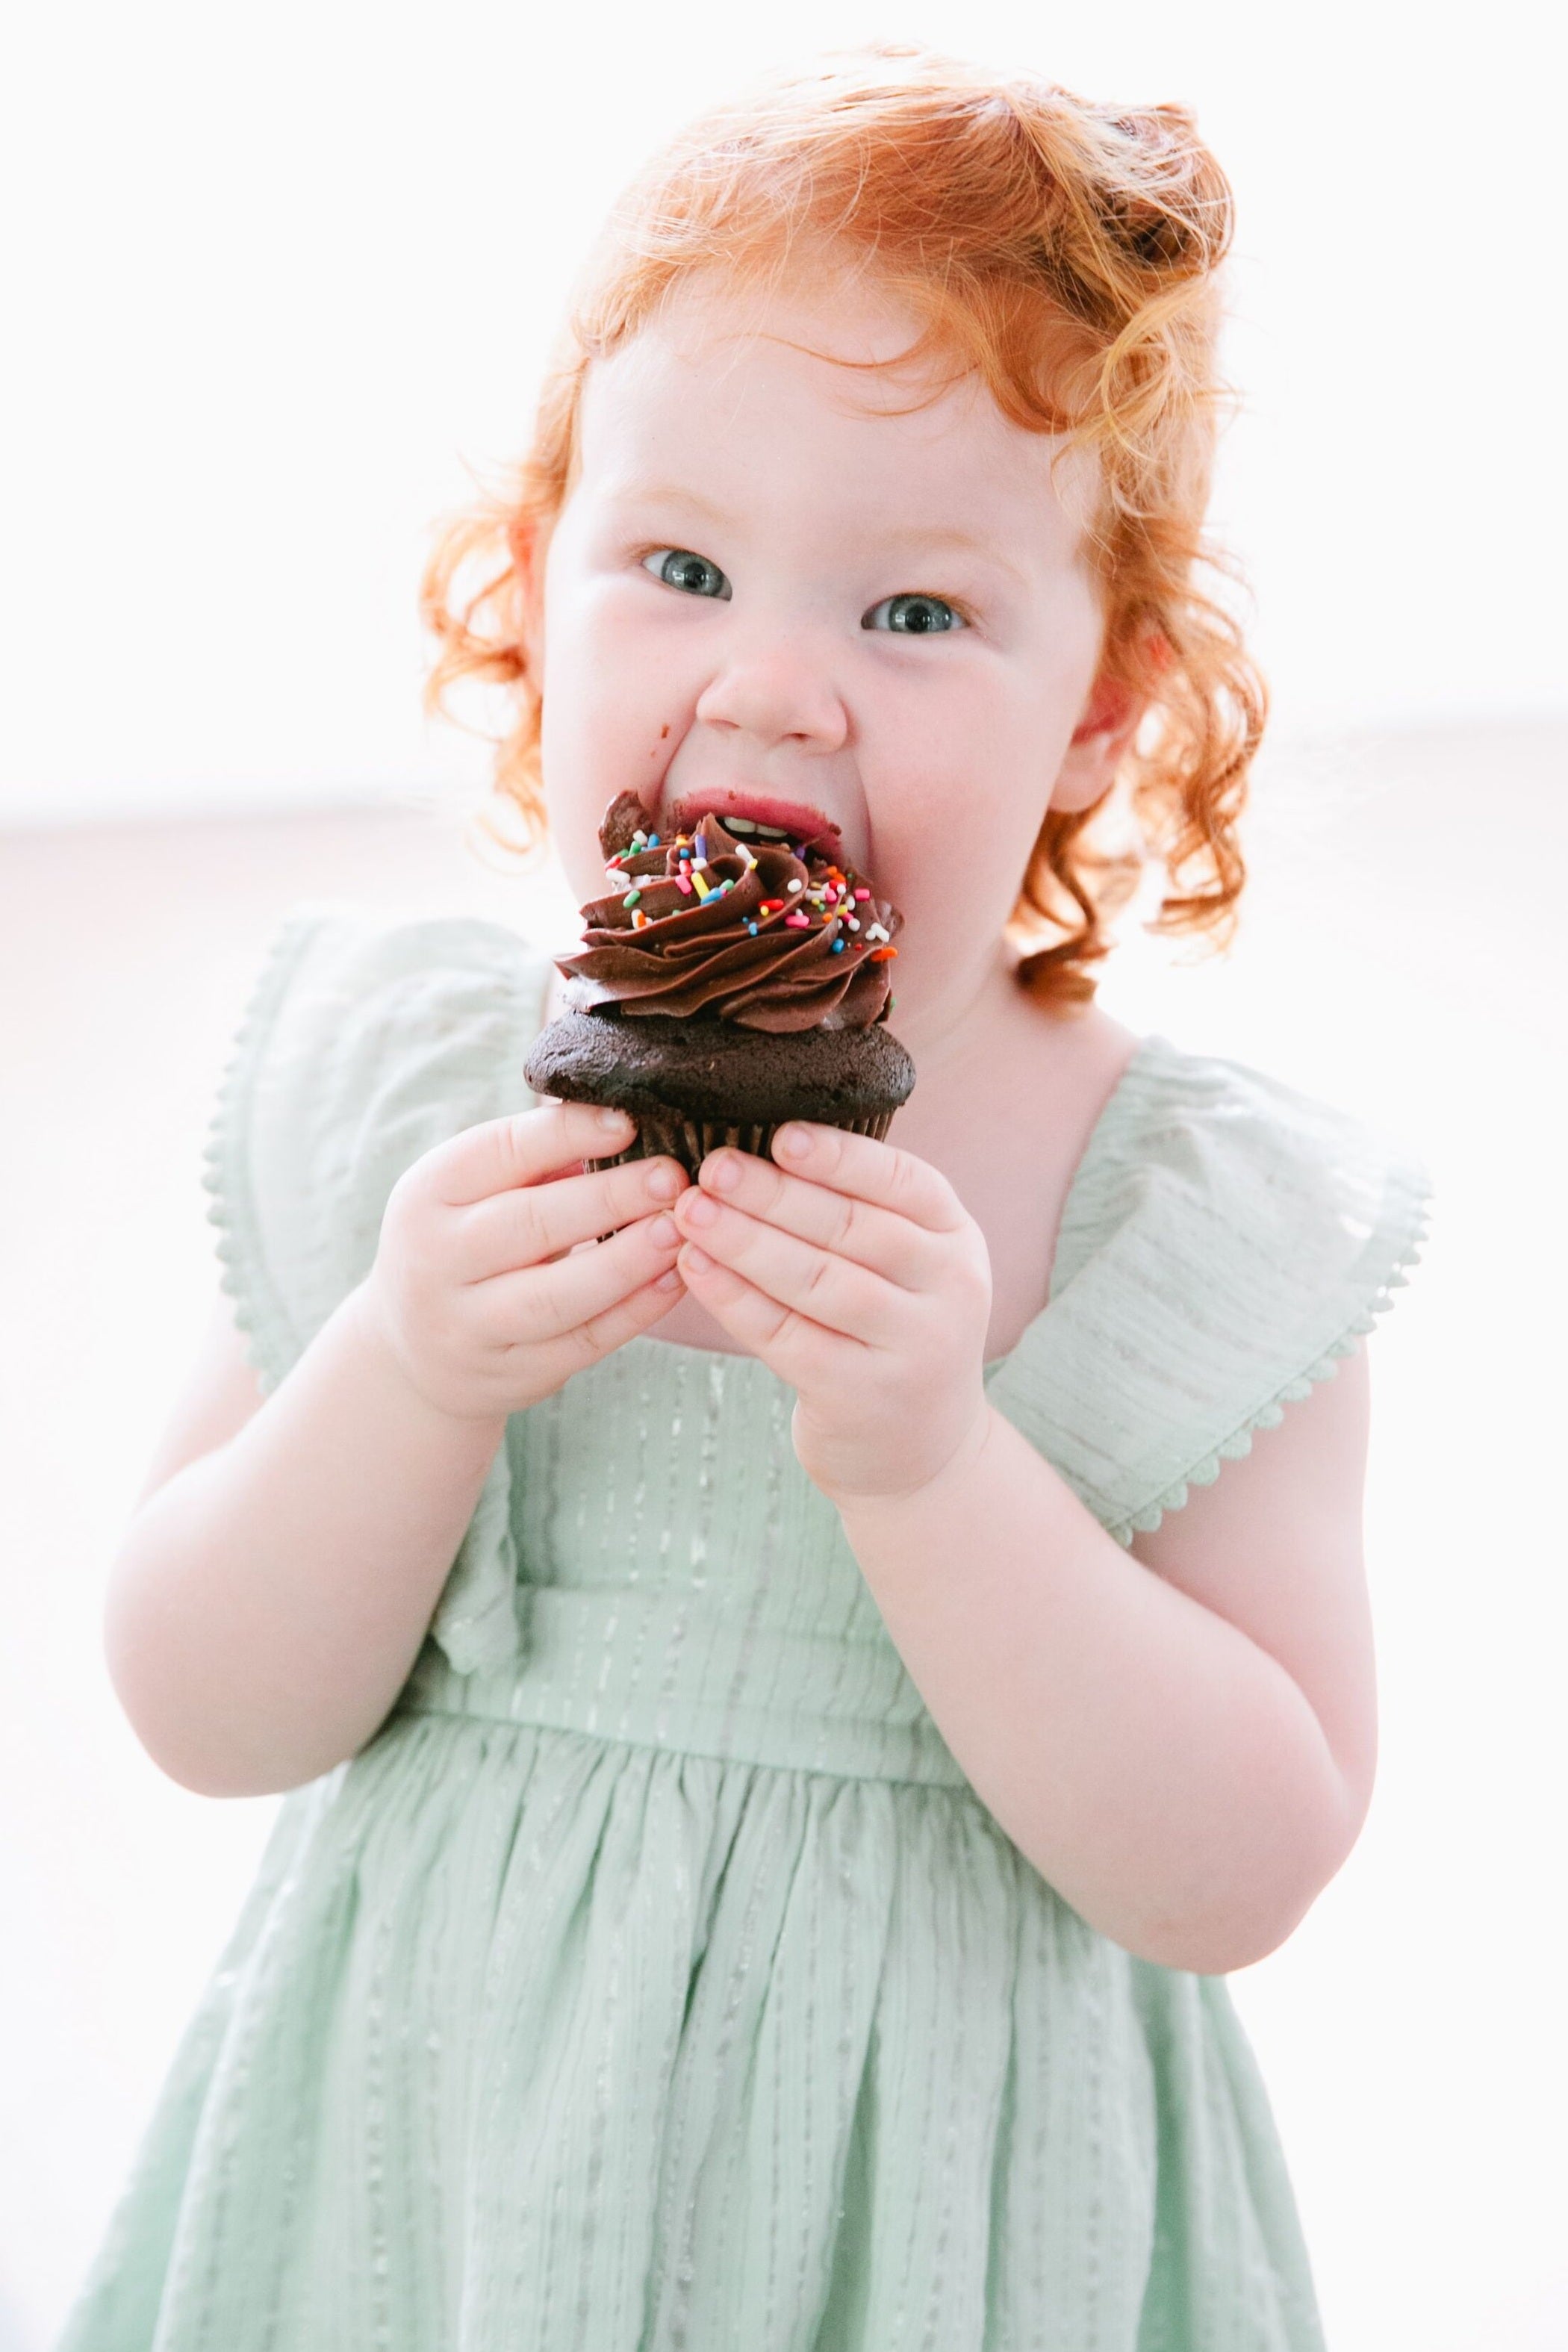 Little girl eats Custom Cupcake Austin Texas